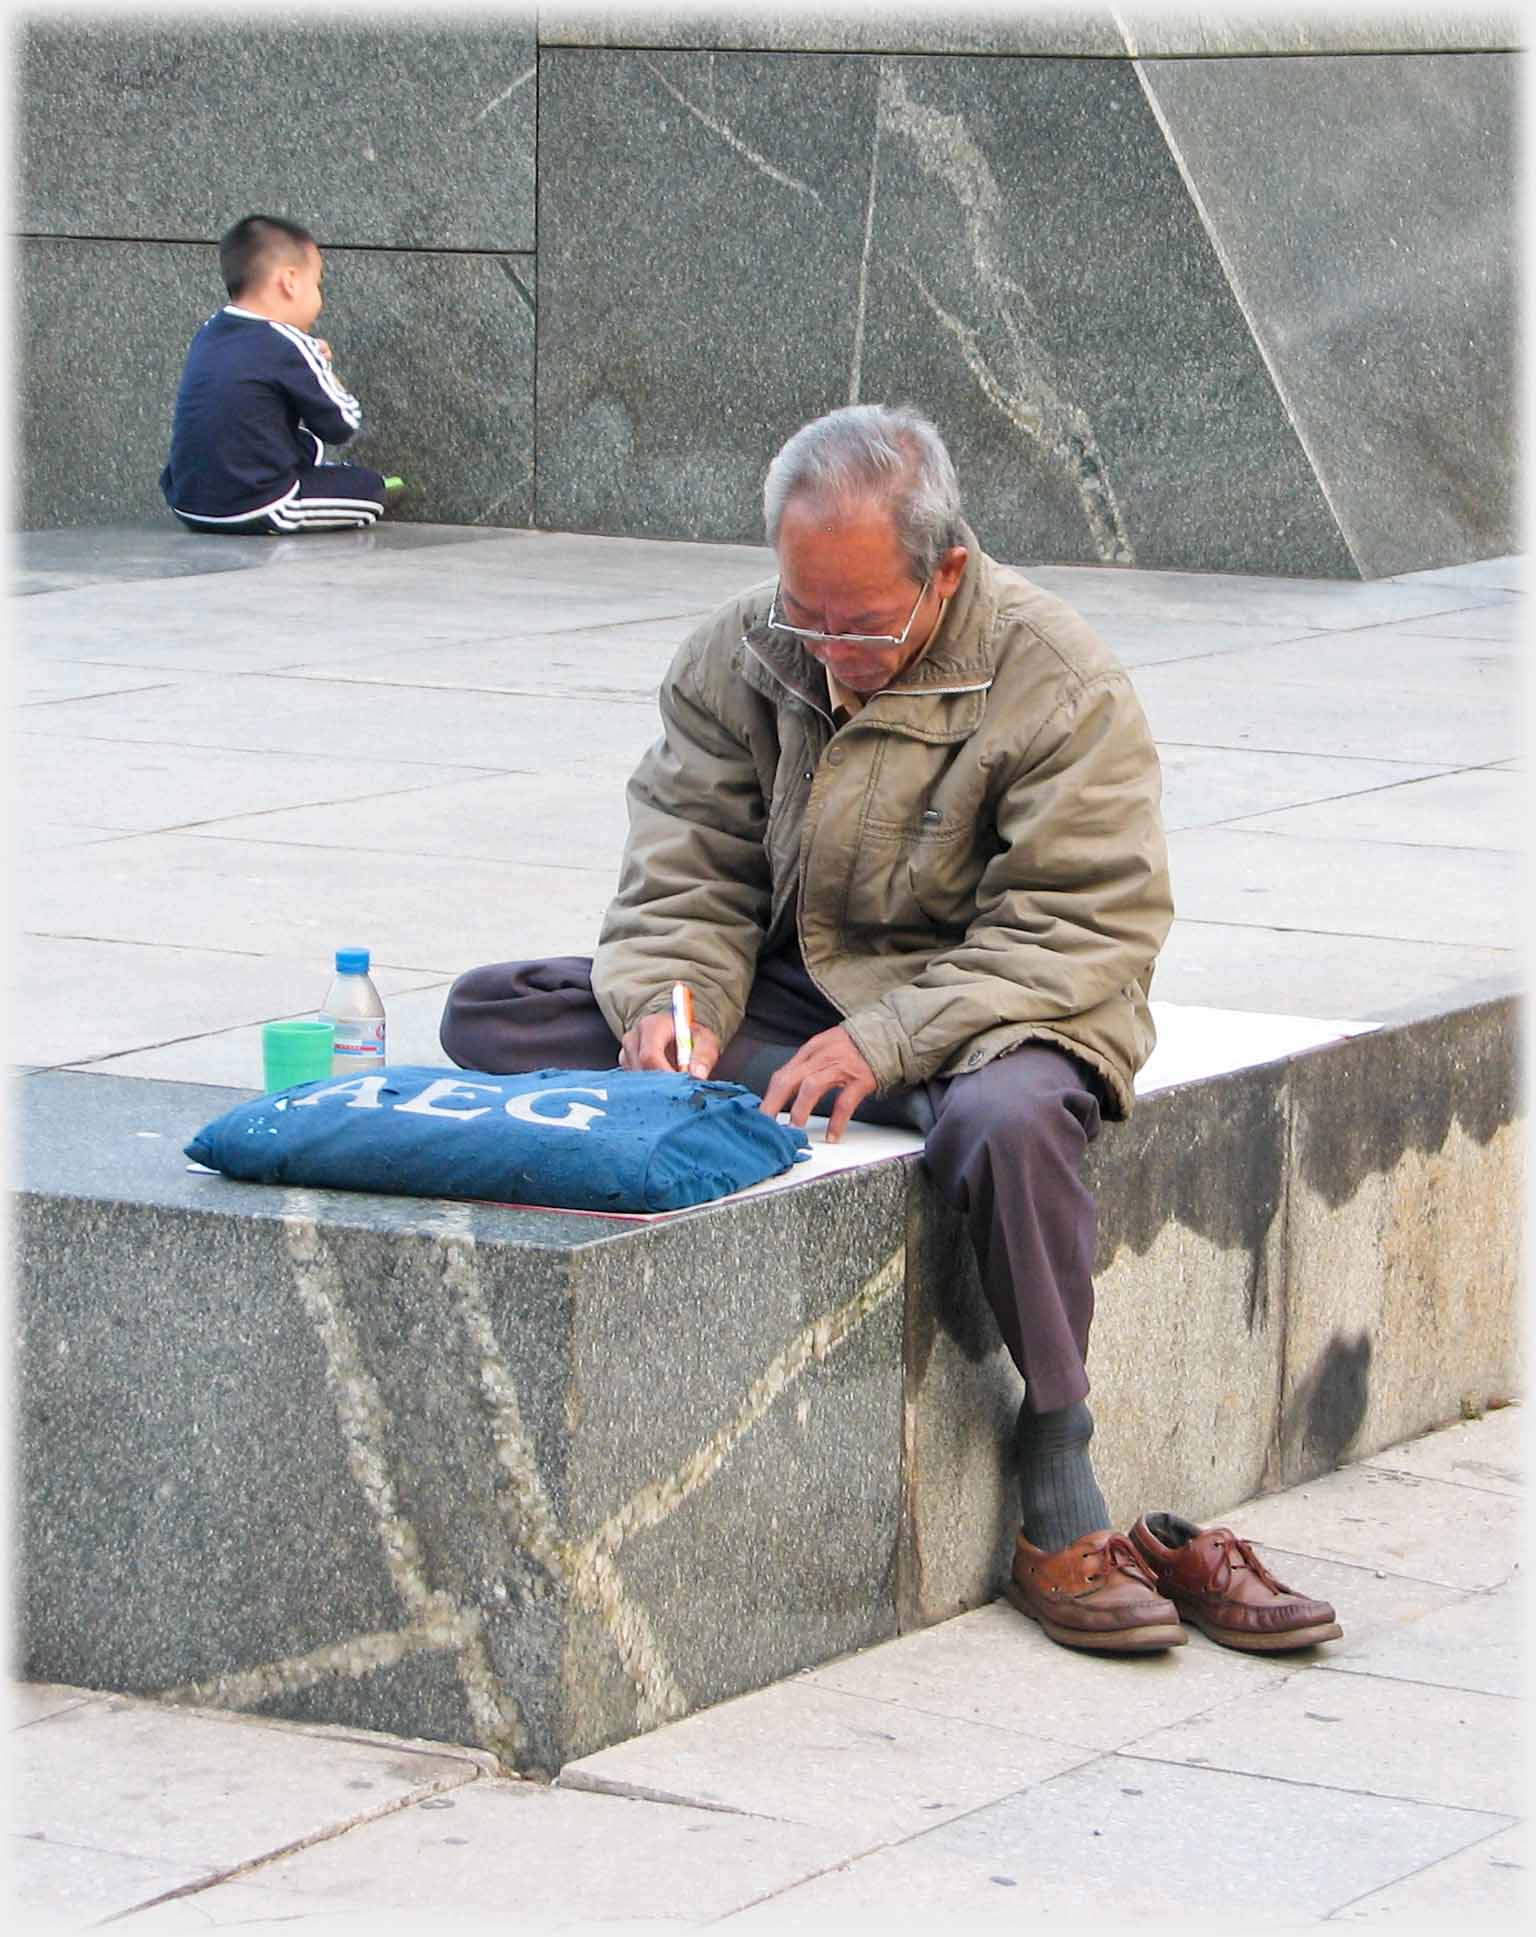 Man sitting on corner of raised area writing, one foot down.